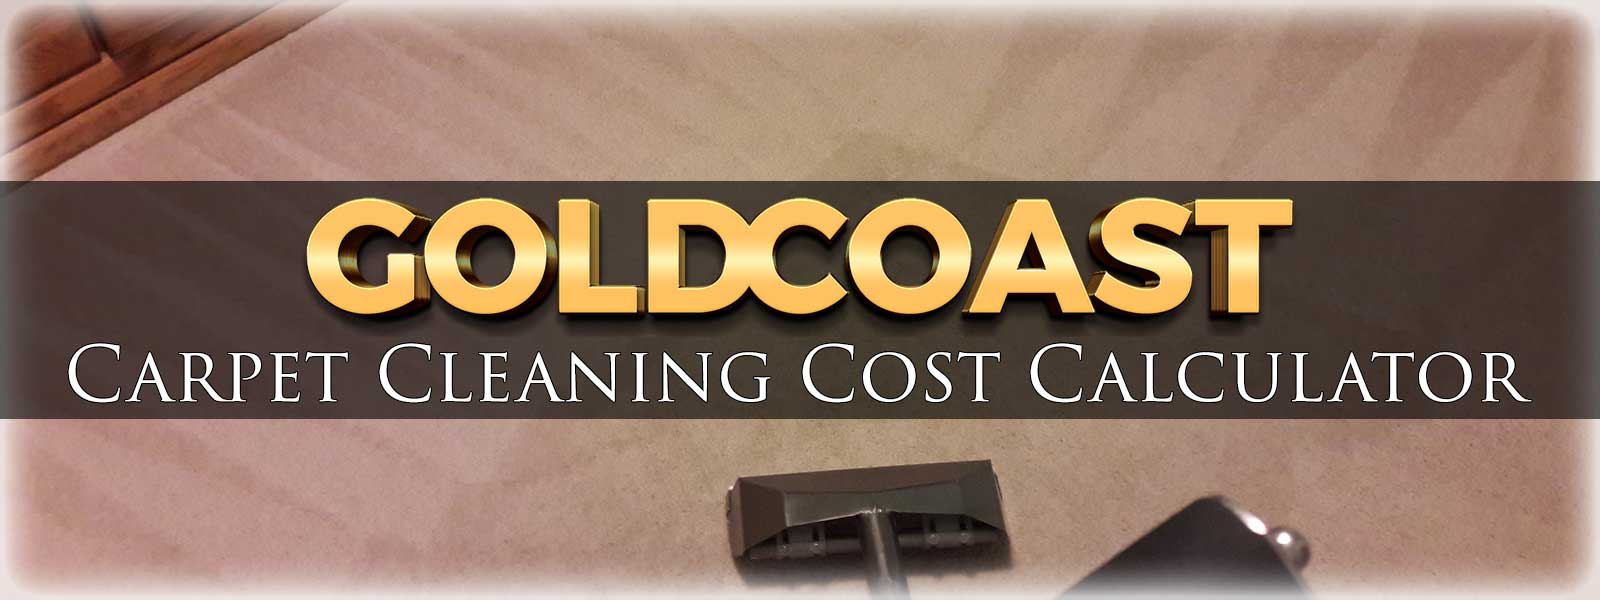 carpet-cleaning-cost-calculator-gold-coast-flooring